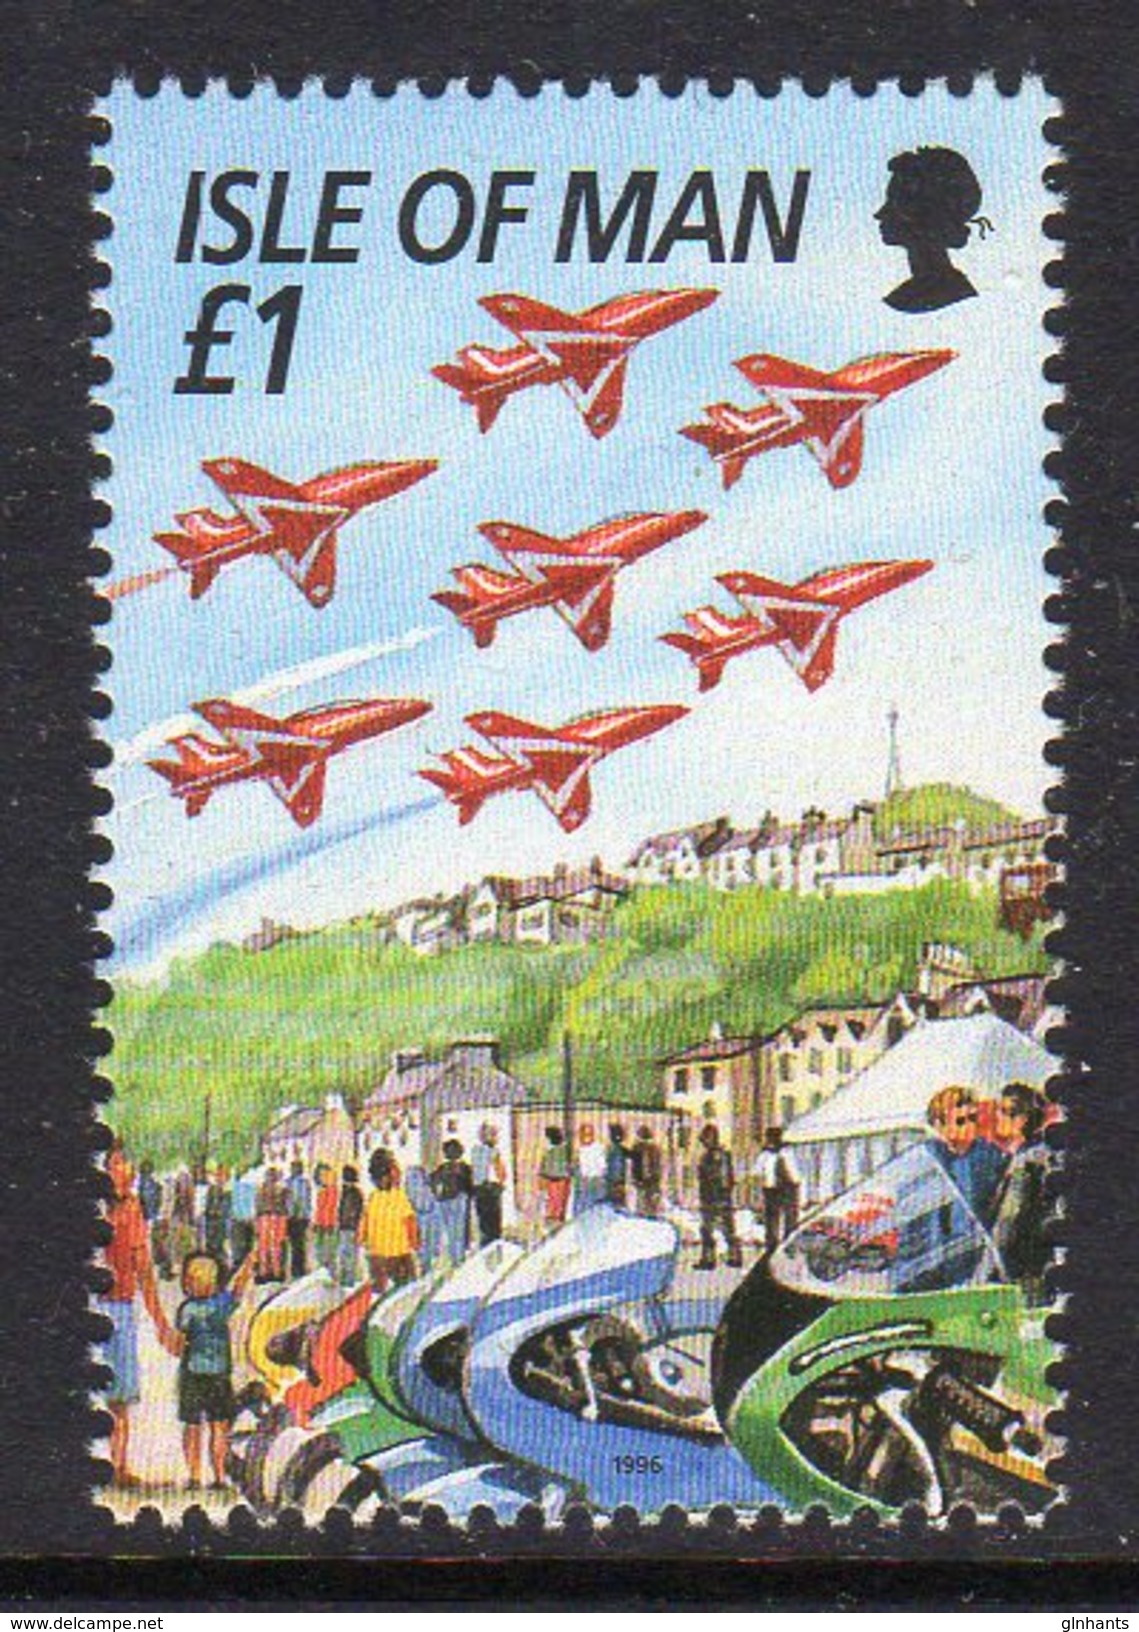 GB ISLE OF MAN IOM - 1996 TT FESTIVAL RED ARROWS £1 STAMP EX SG MS707 FINE MNH ** - Isle Of Man